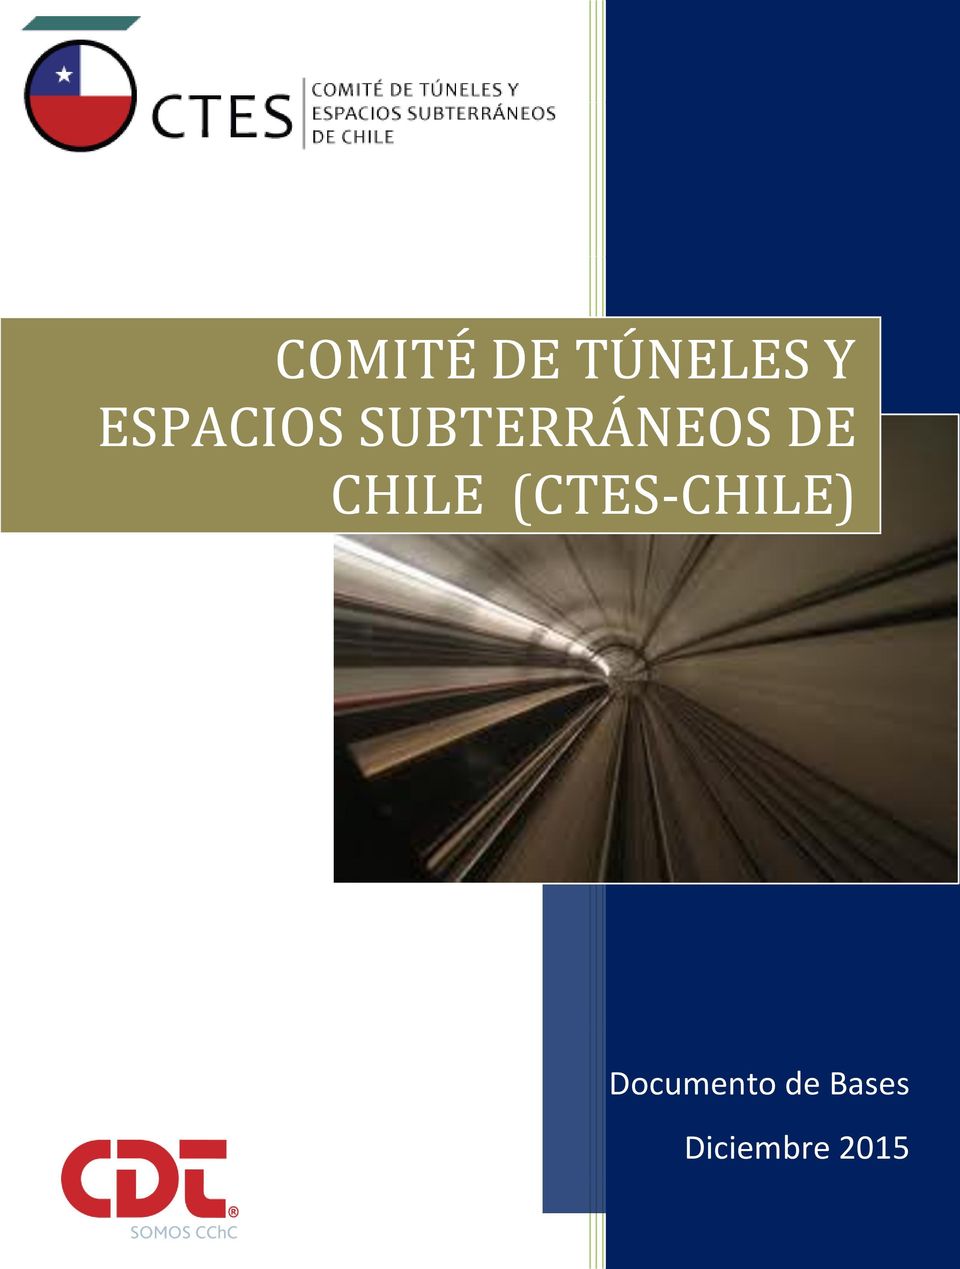 CHILE (CTES-CHILE)